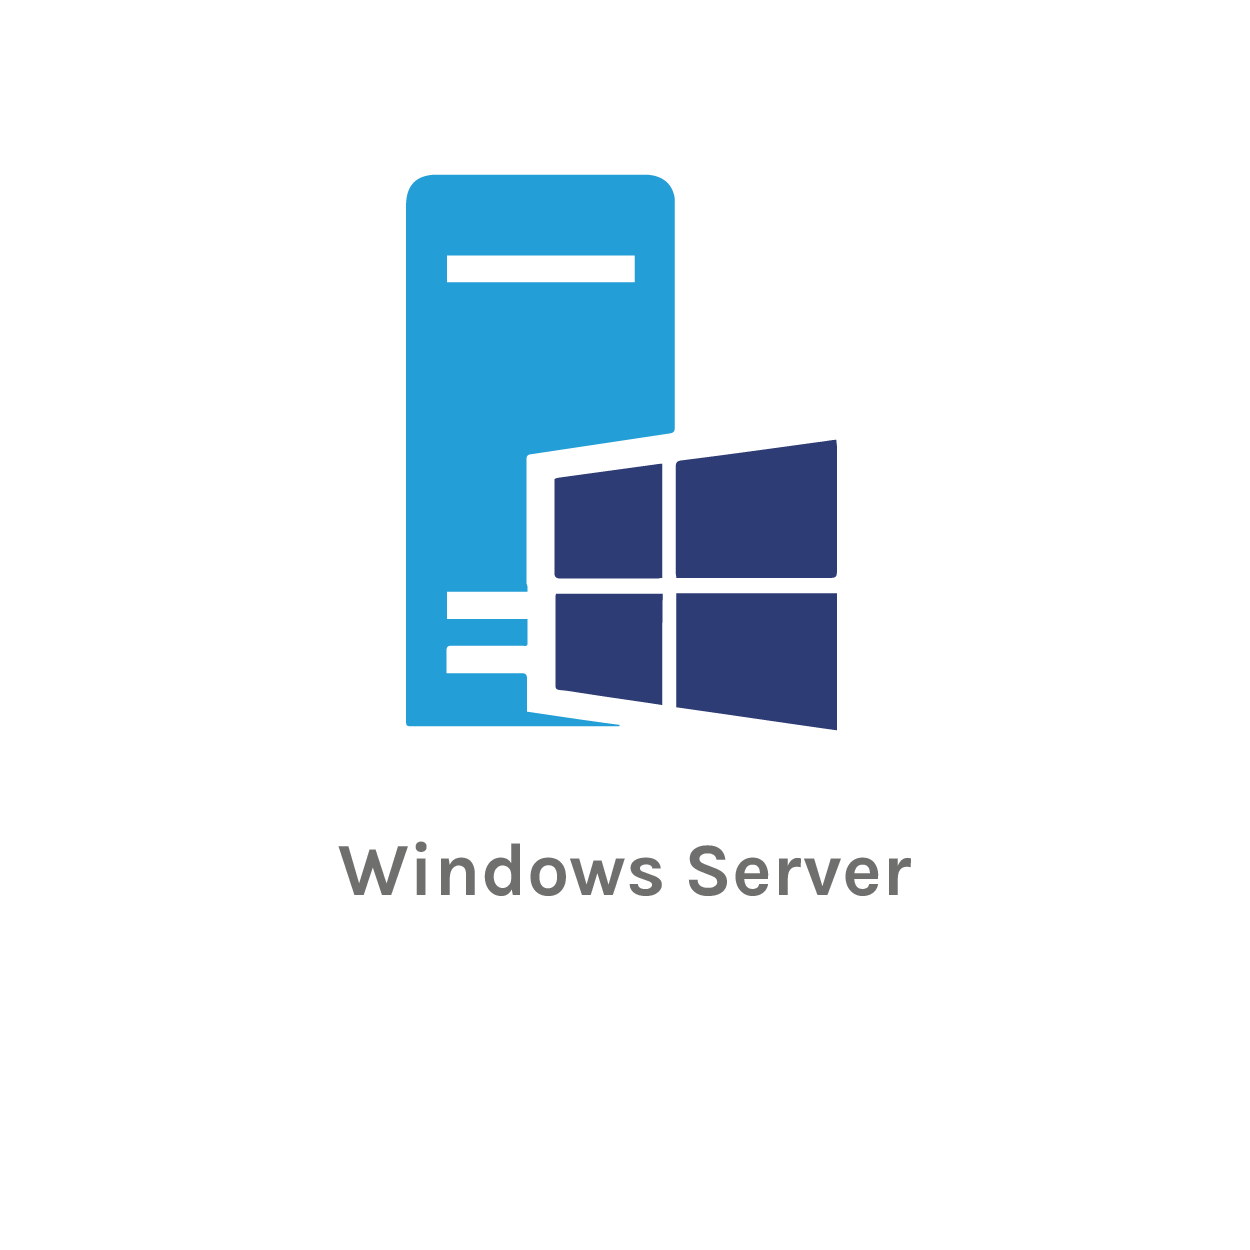 windows_server-01.png